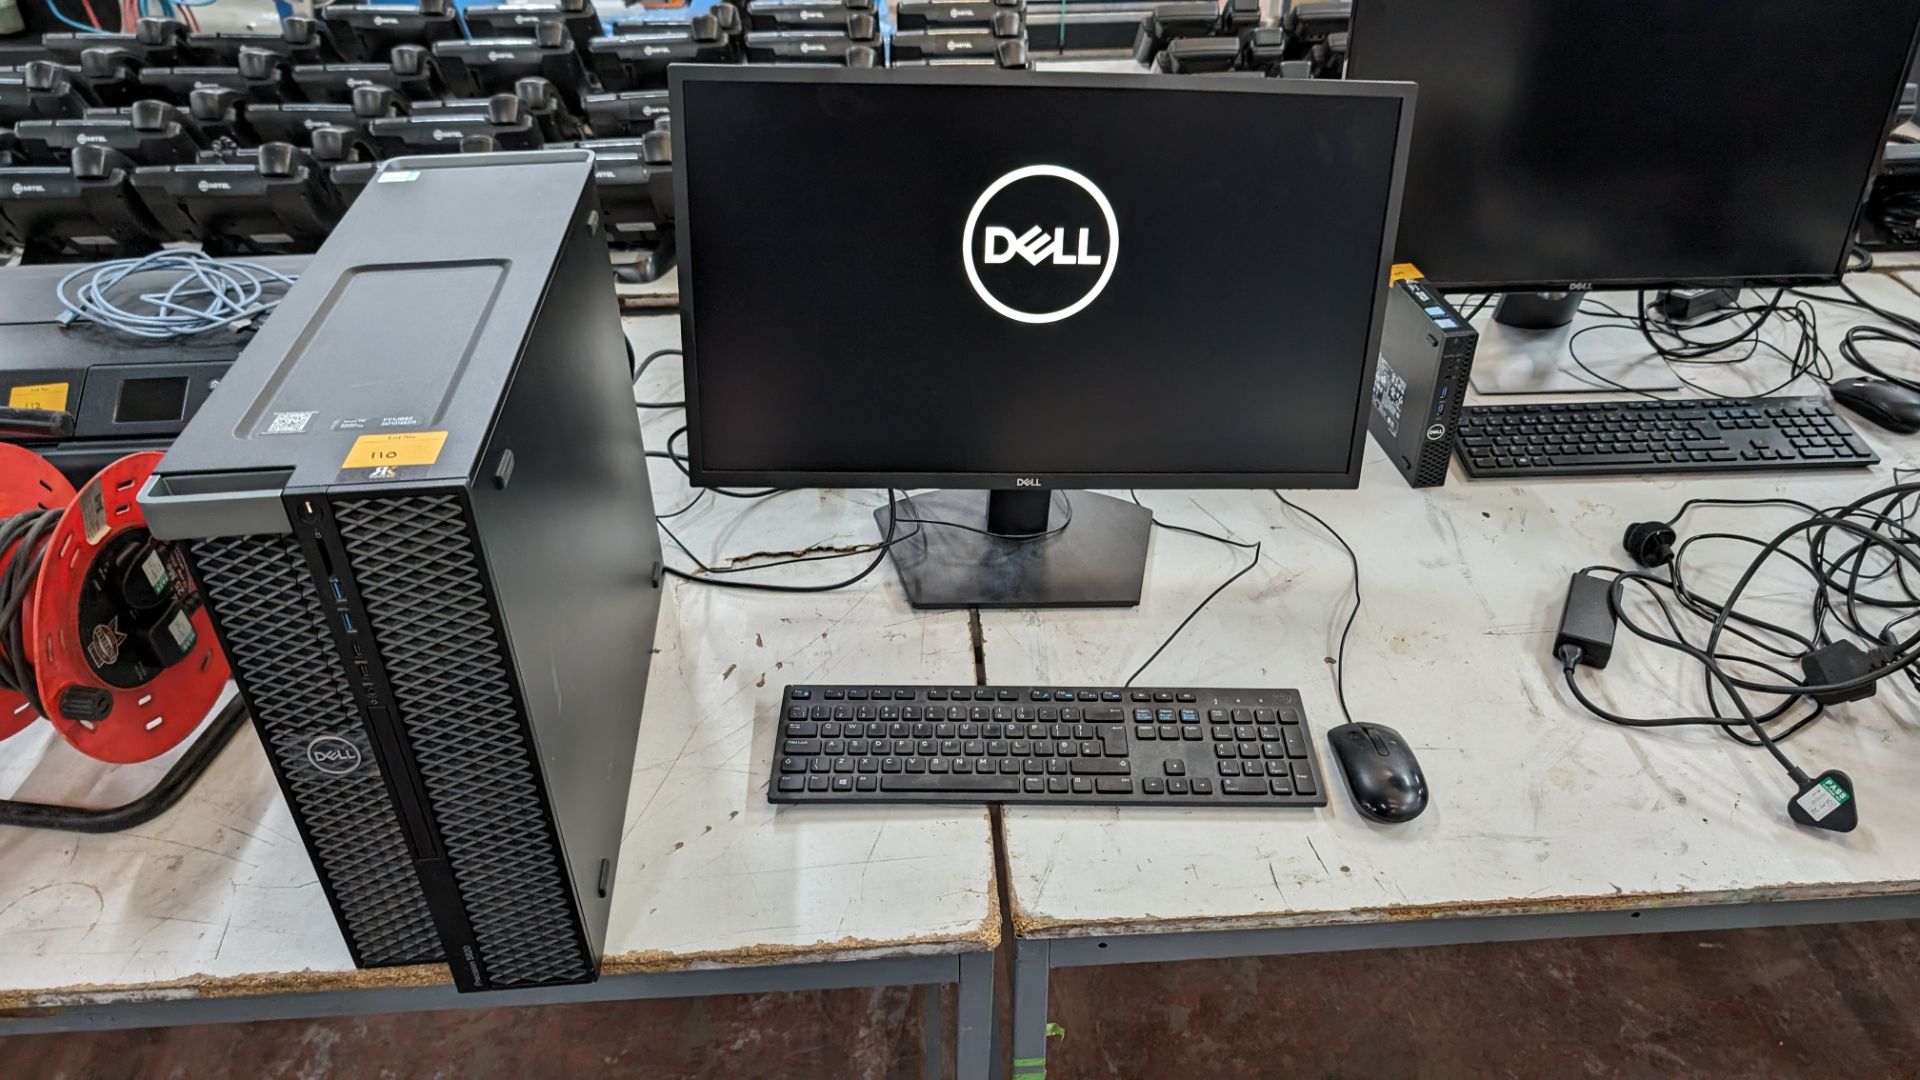 Dell Precision 5820 tower workstation with Intel Xeon CPU, Nvidia Quadro P4000 graphics card includi - Image 9 of 14